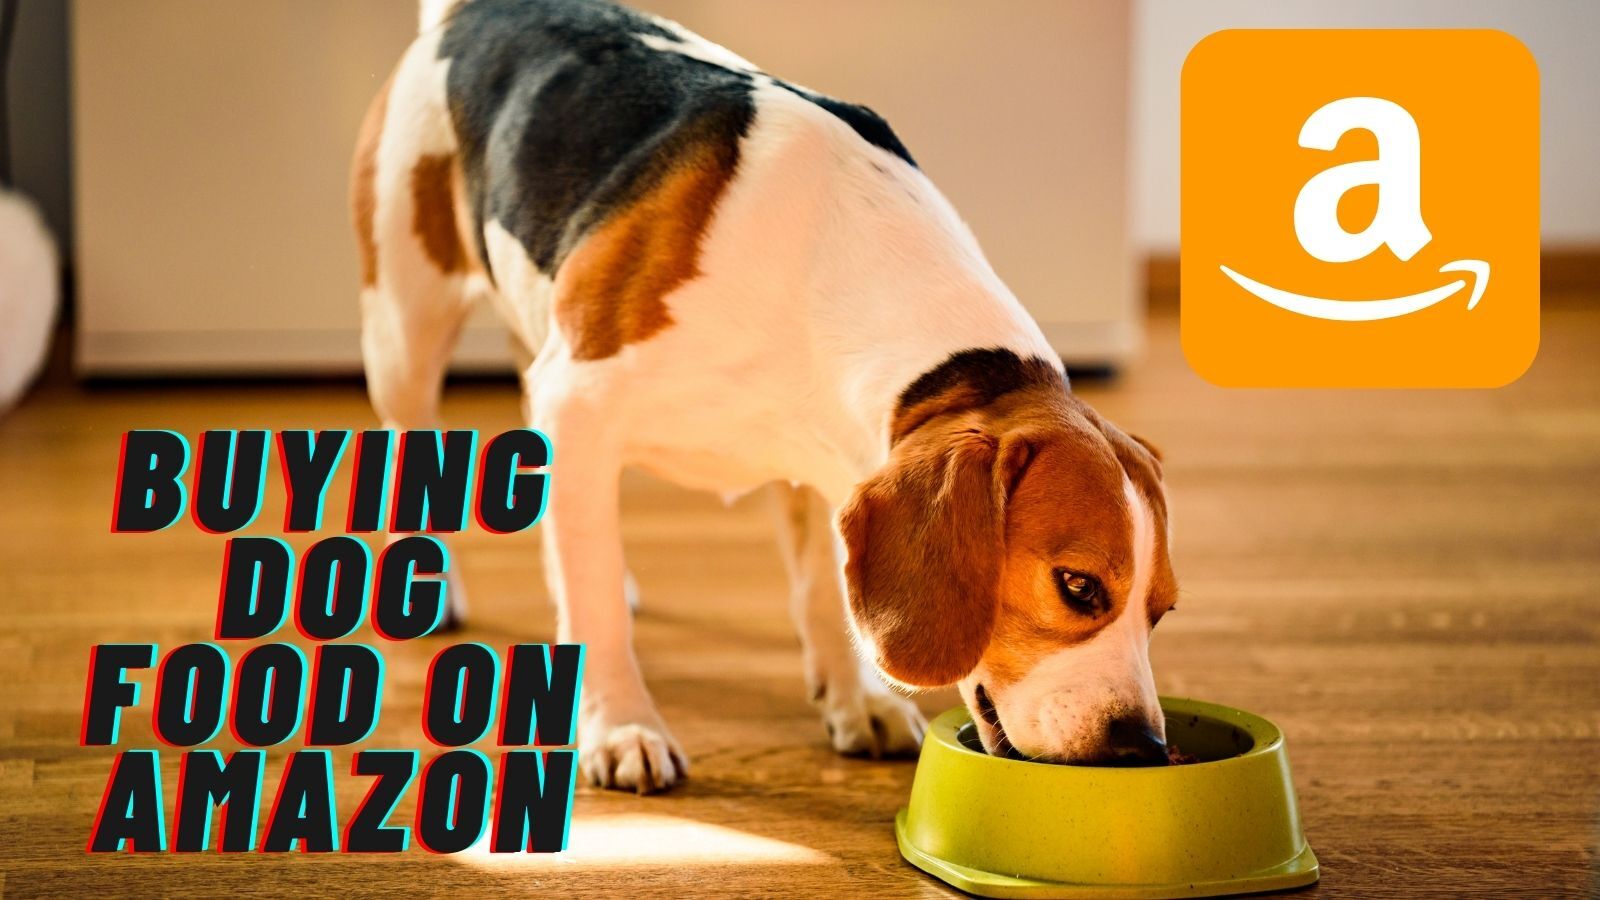 Is It Safe to Buy Dog Food on Amazon?